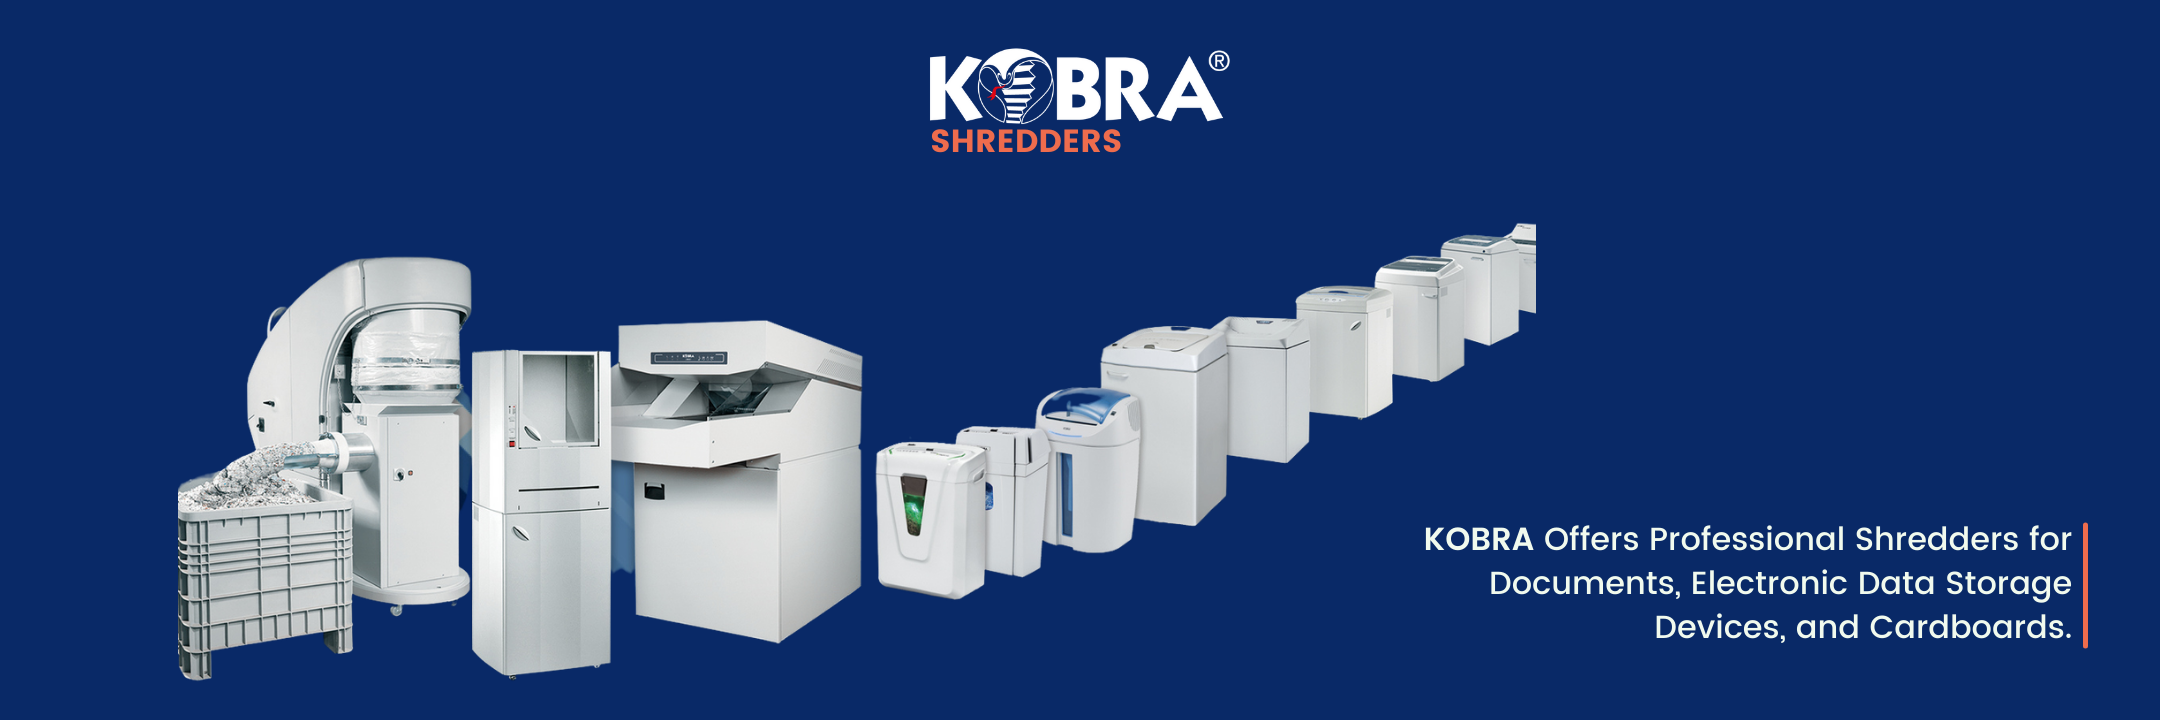 Kobra-Shredders-USA-Product-Line-1